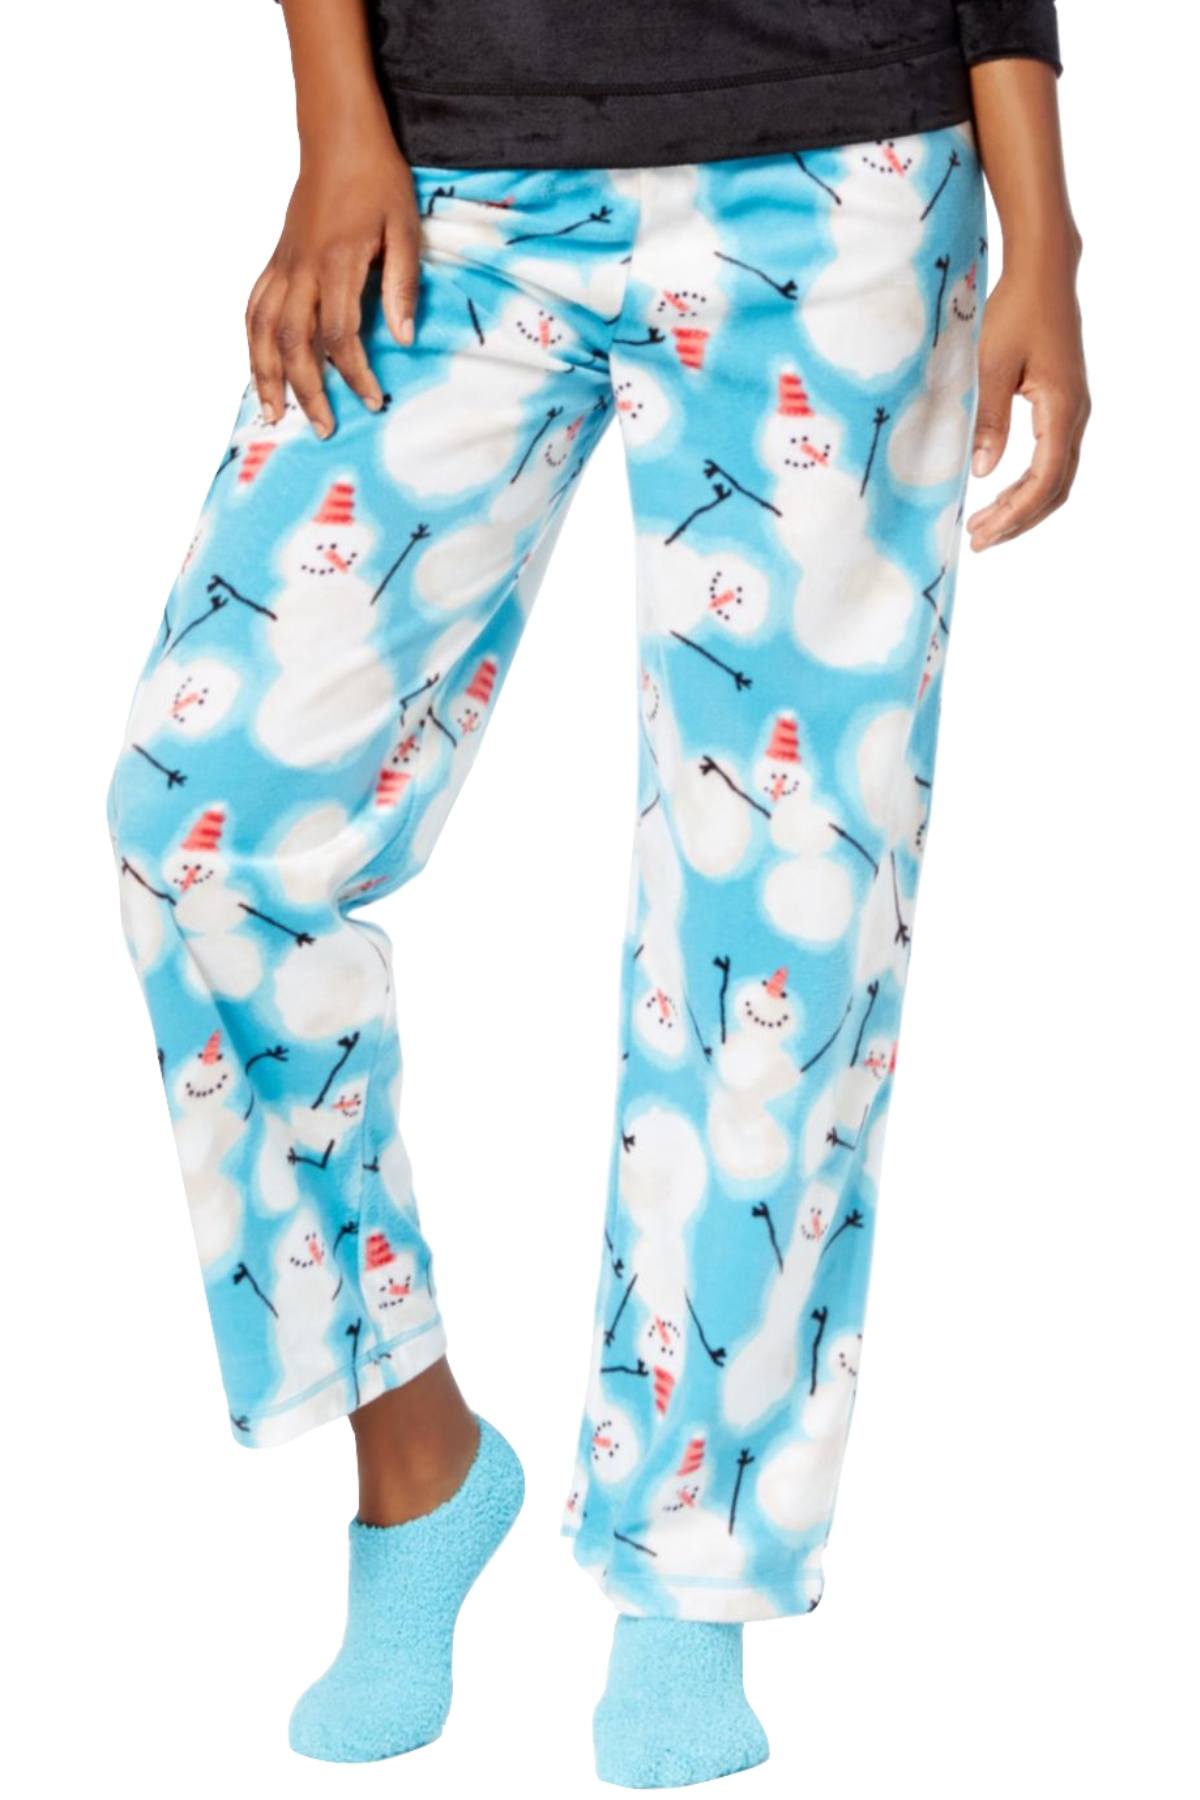 HUE Black Sueded Fleece Top and Snowman-Printed Pant 3-Piece Pajama Set